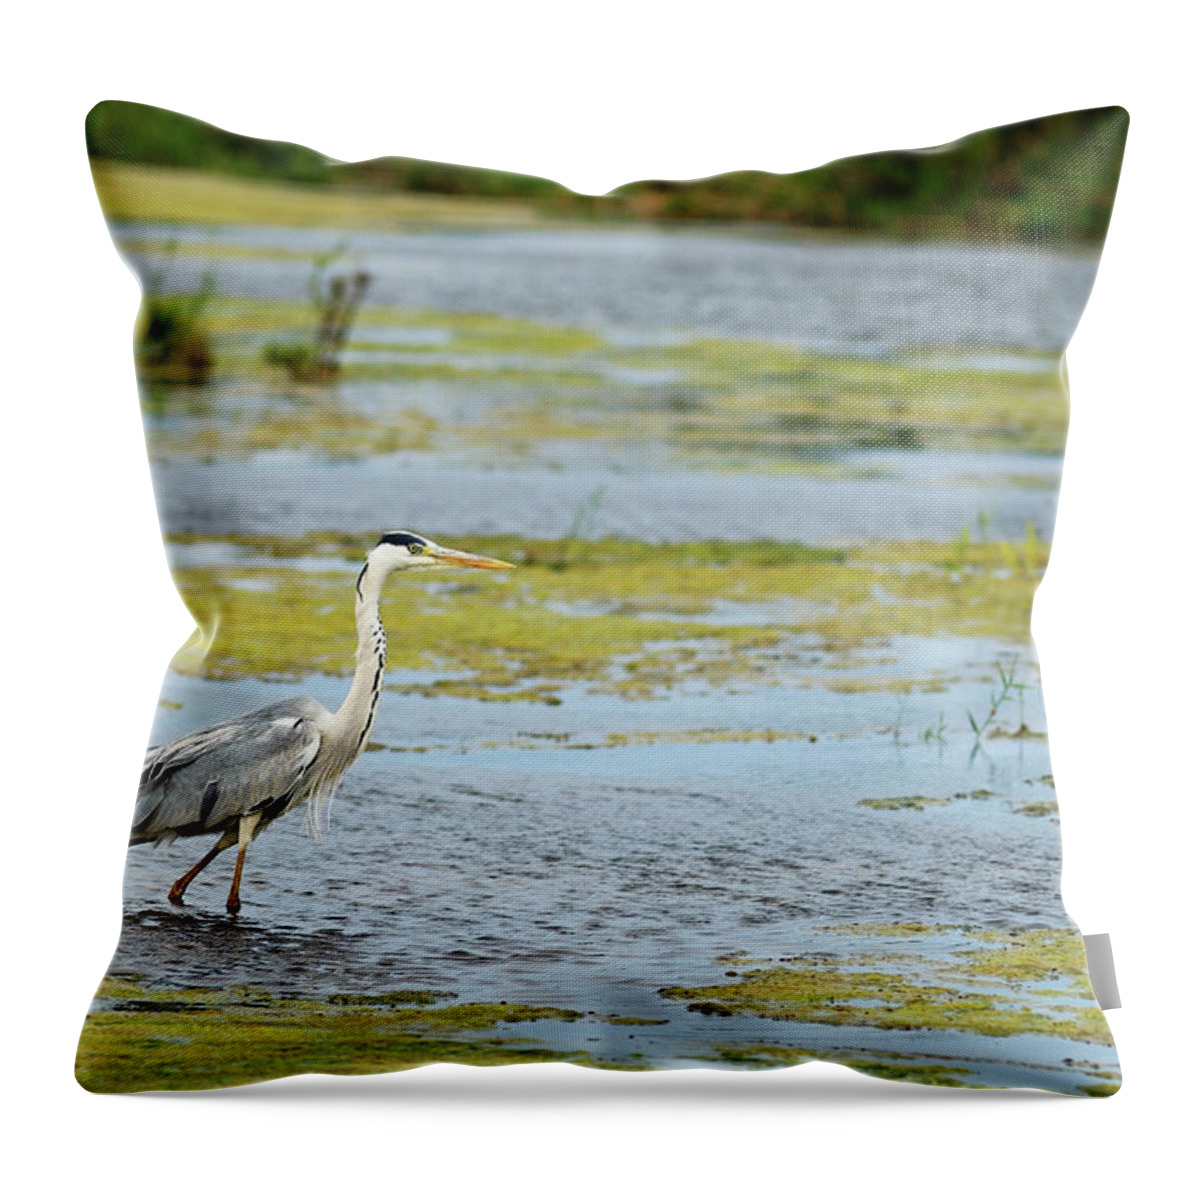 Grass Throw Pillow featuring the photograph Grey Heron Ardea Cinerea Looking For by Sami Sarkis